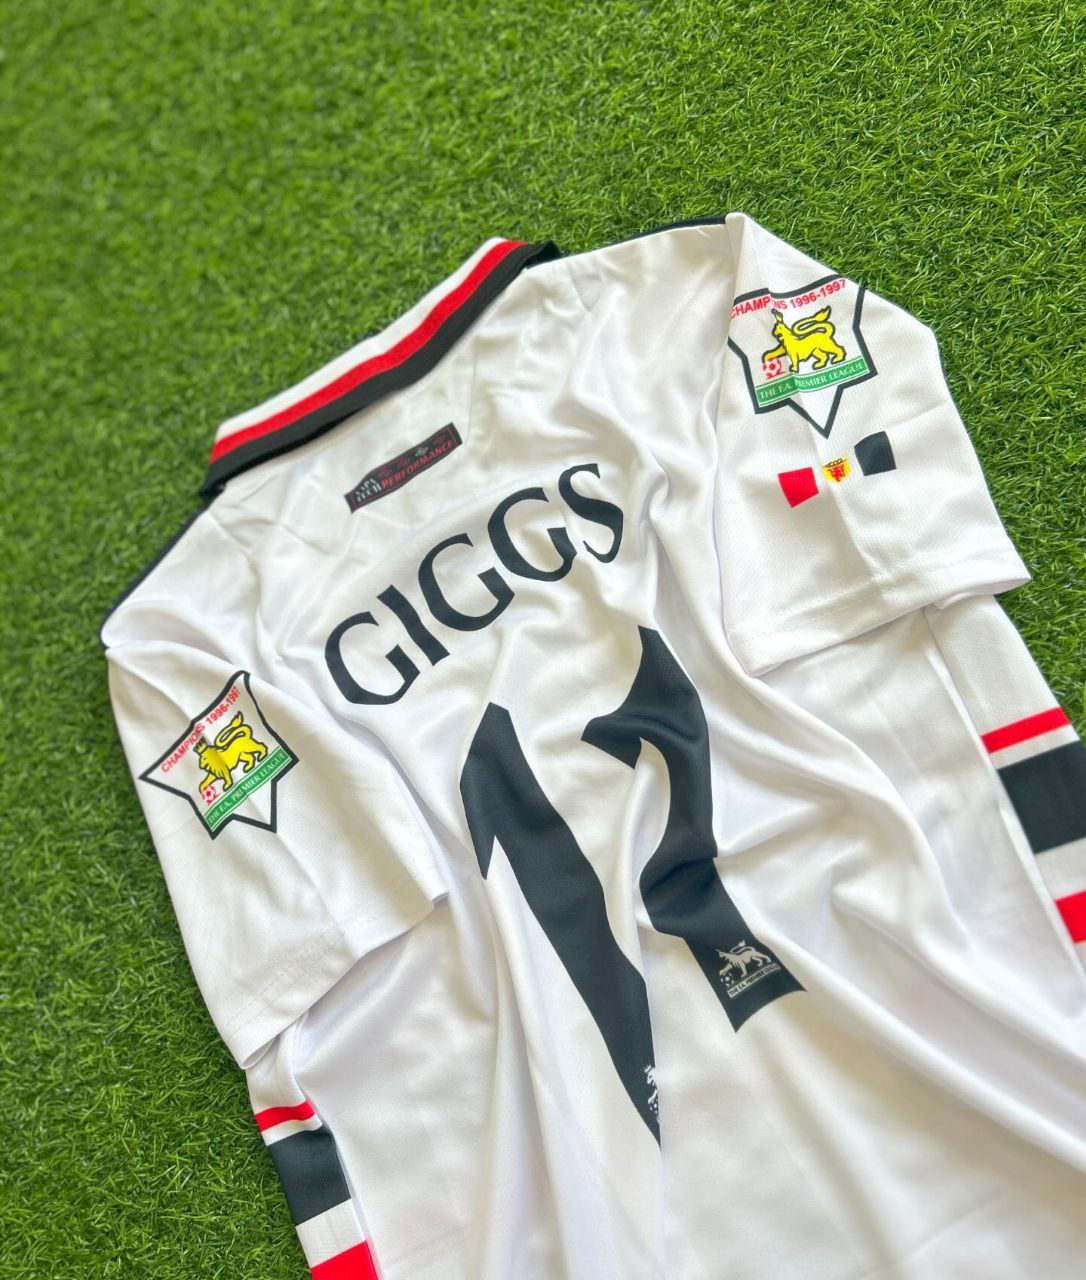 Ryan Giggs 97/98 Manchester United Retro Jersey